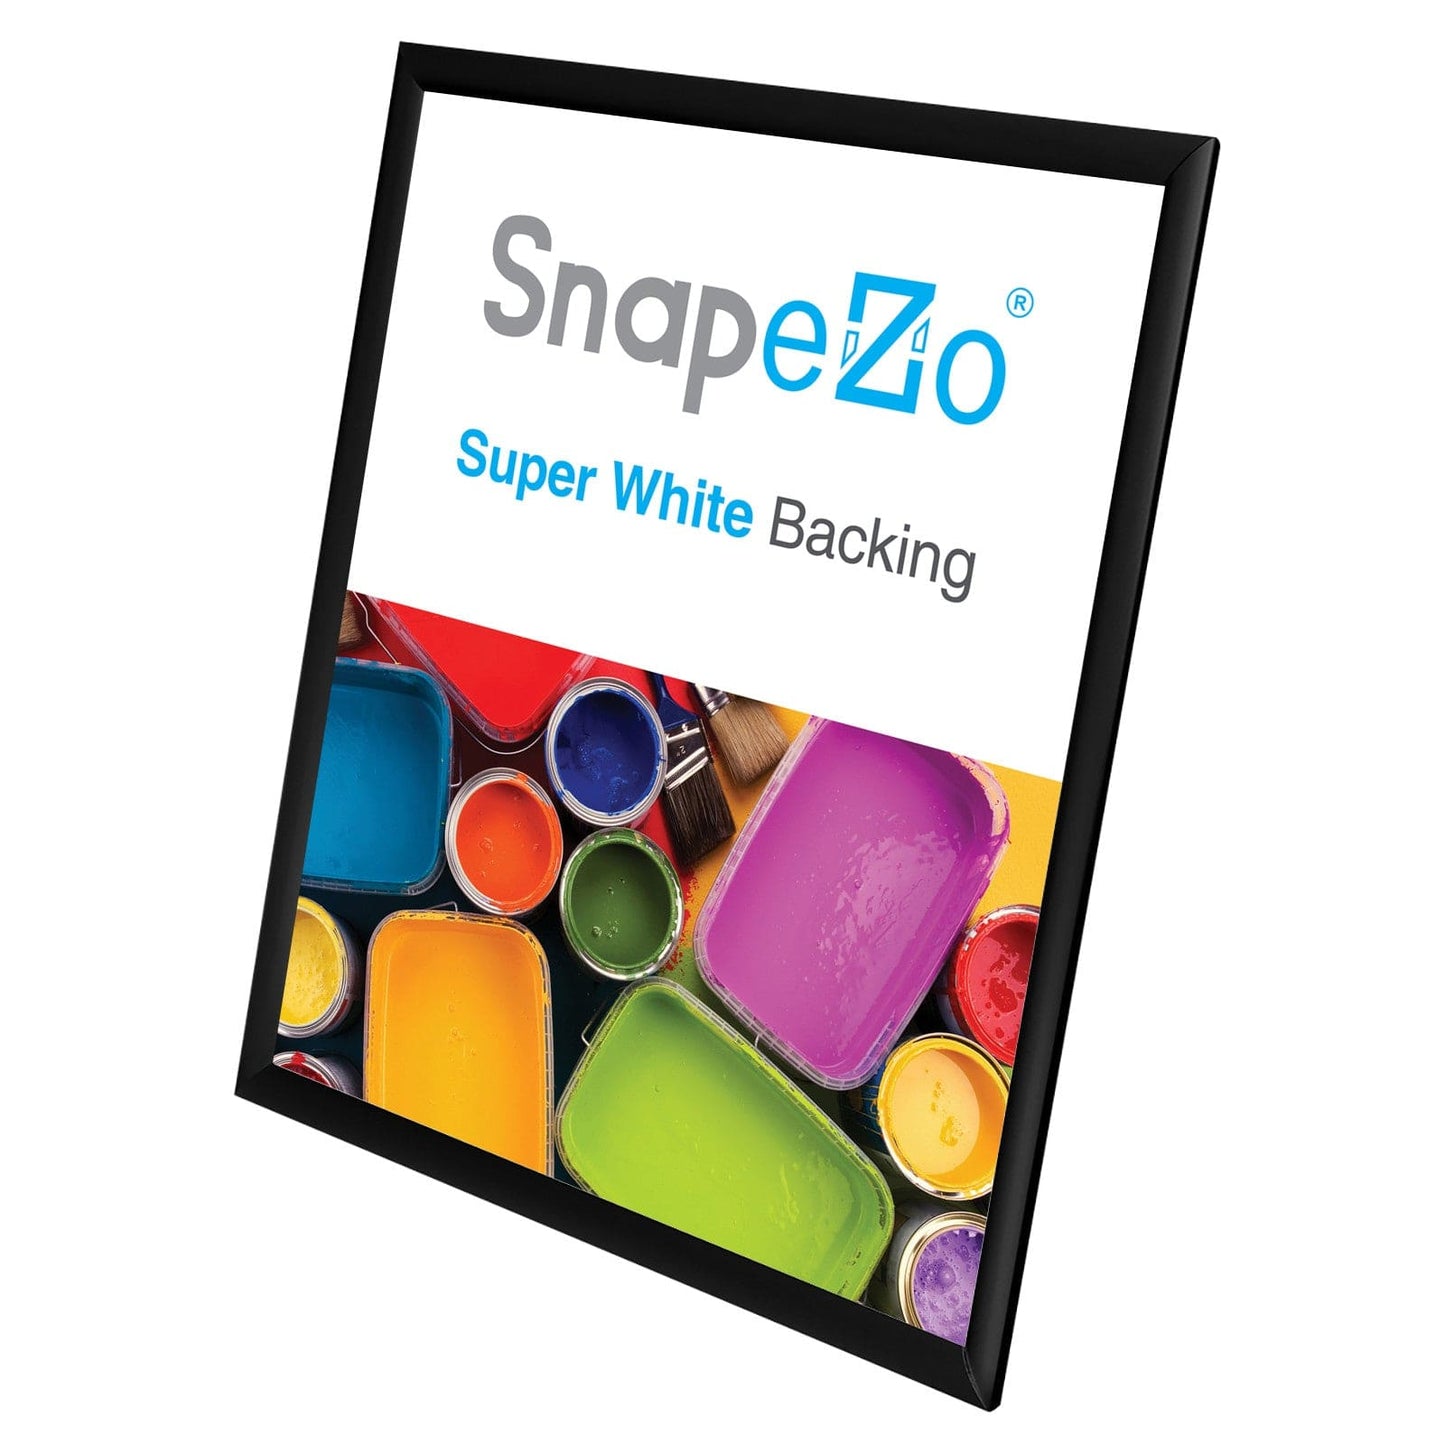 24x30 Black SnapeZo® Poster Snap Frame 1" - Snap Frames Direct